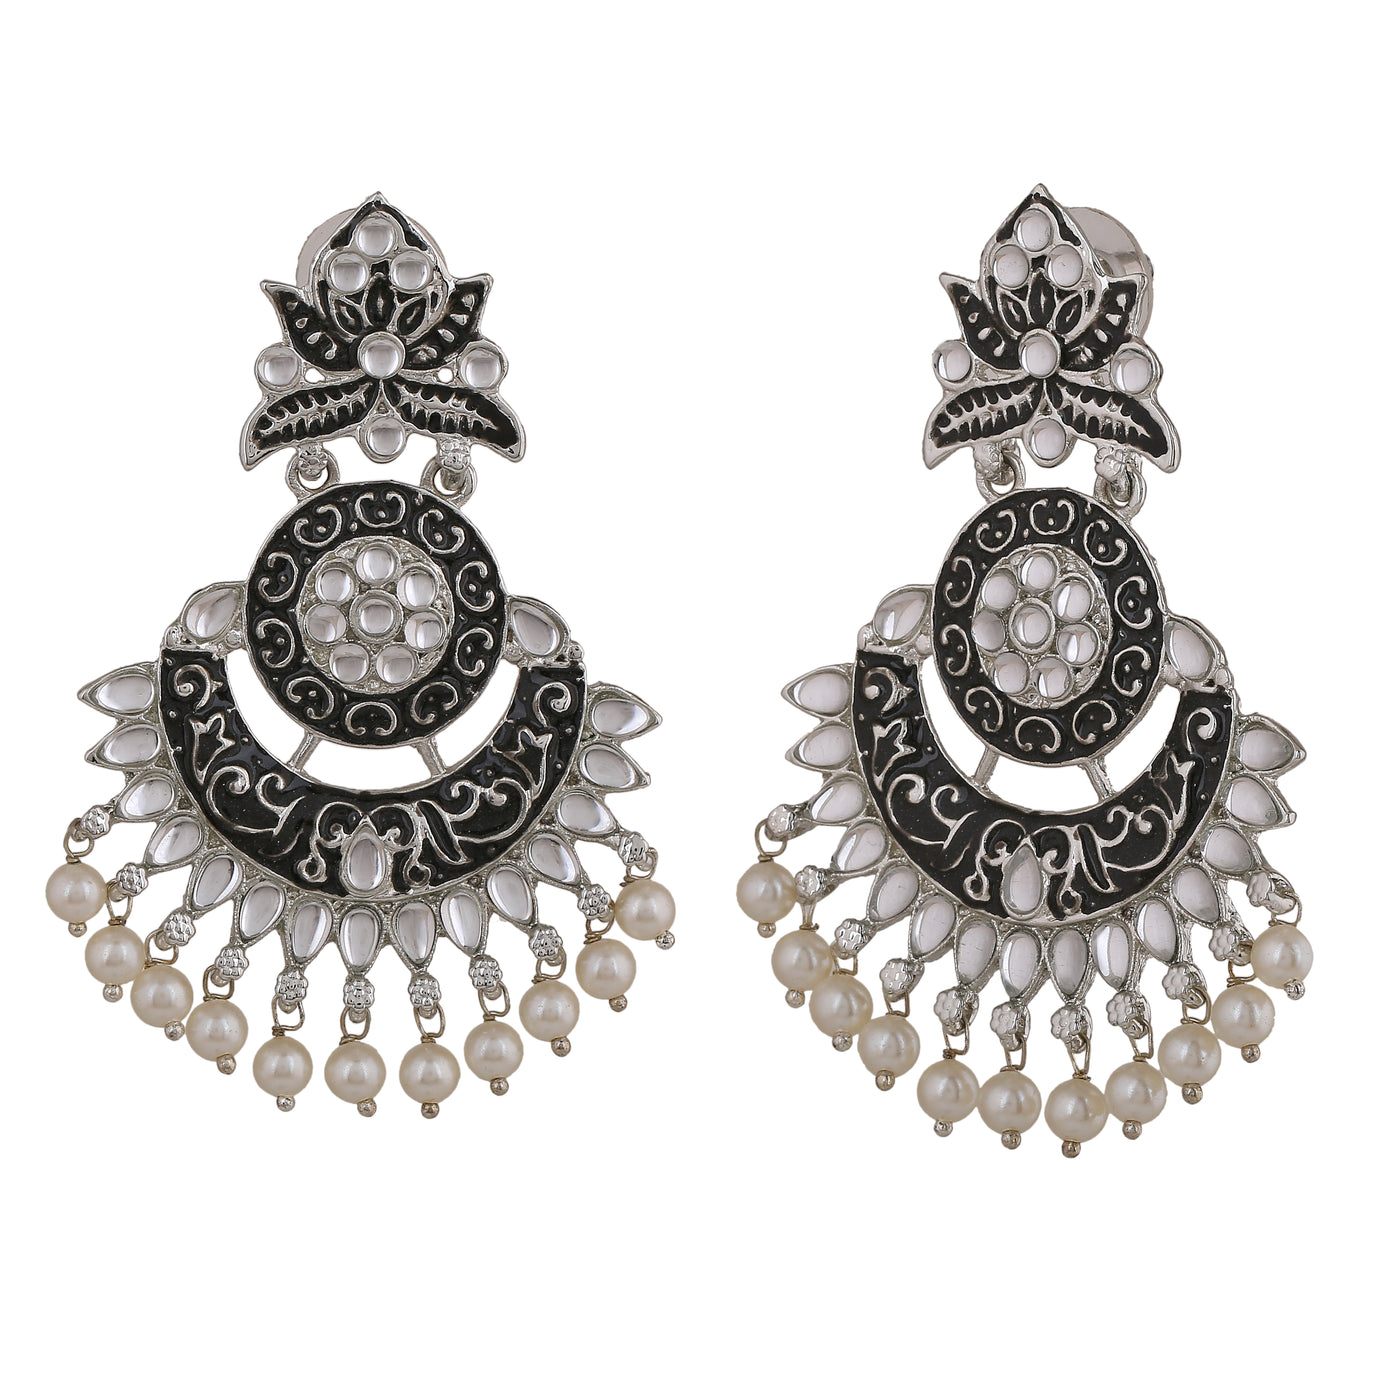 Estele Rhodium Plated Glorious Traditional Black Meenakari Drop Earrings with Pearl for Women